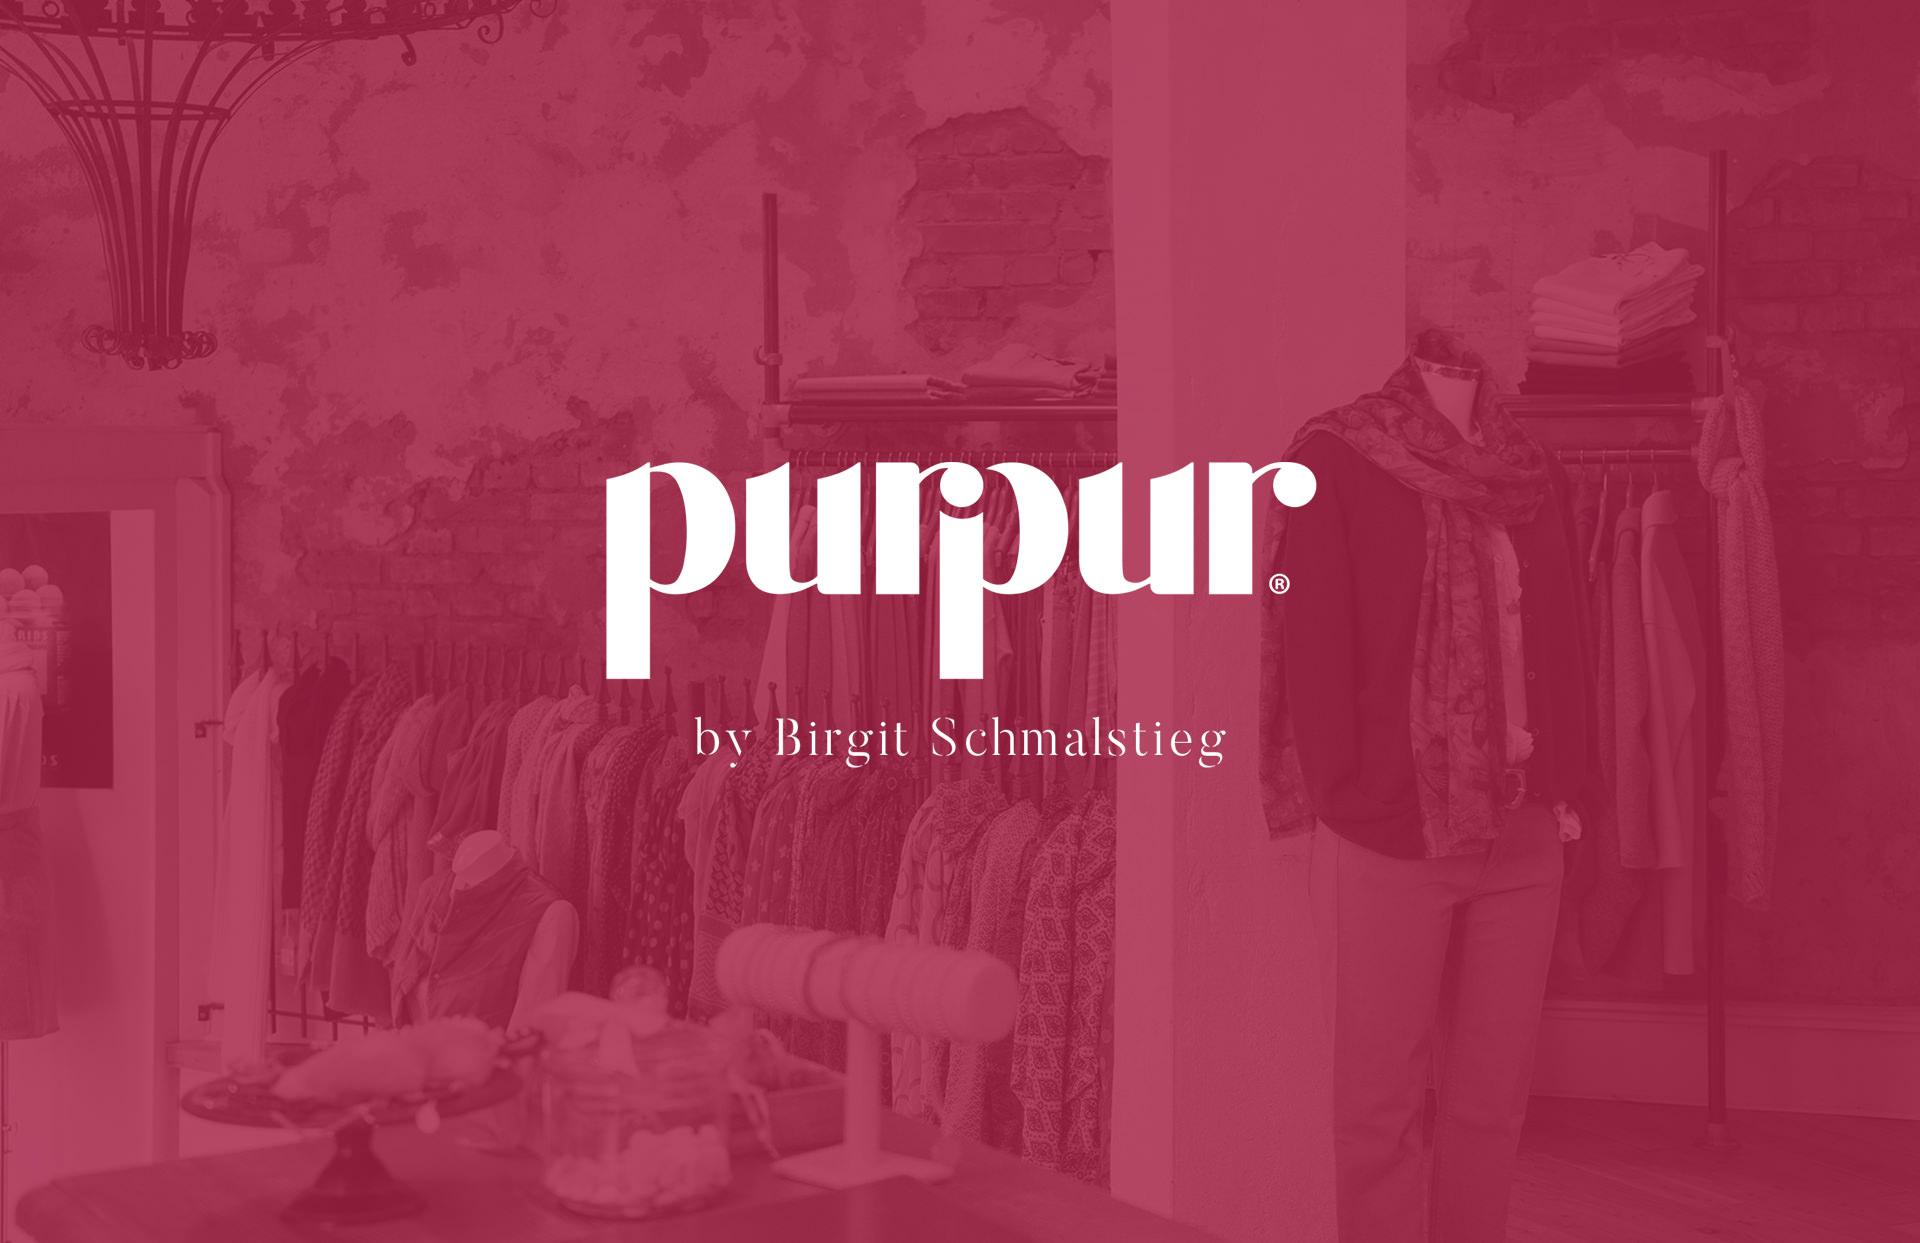 Schmalstieg Boutique Fashion Mode Design Purpur Marie Jo Marketing Kampagne Campaign Website Launch Label Marke Birgit LAKE5 Consulting GmbH Hannover Germany